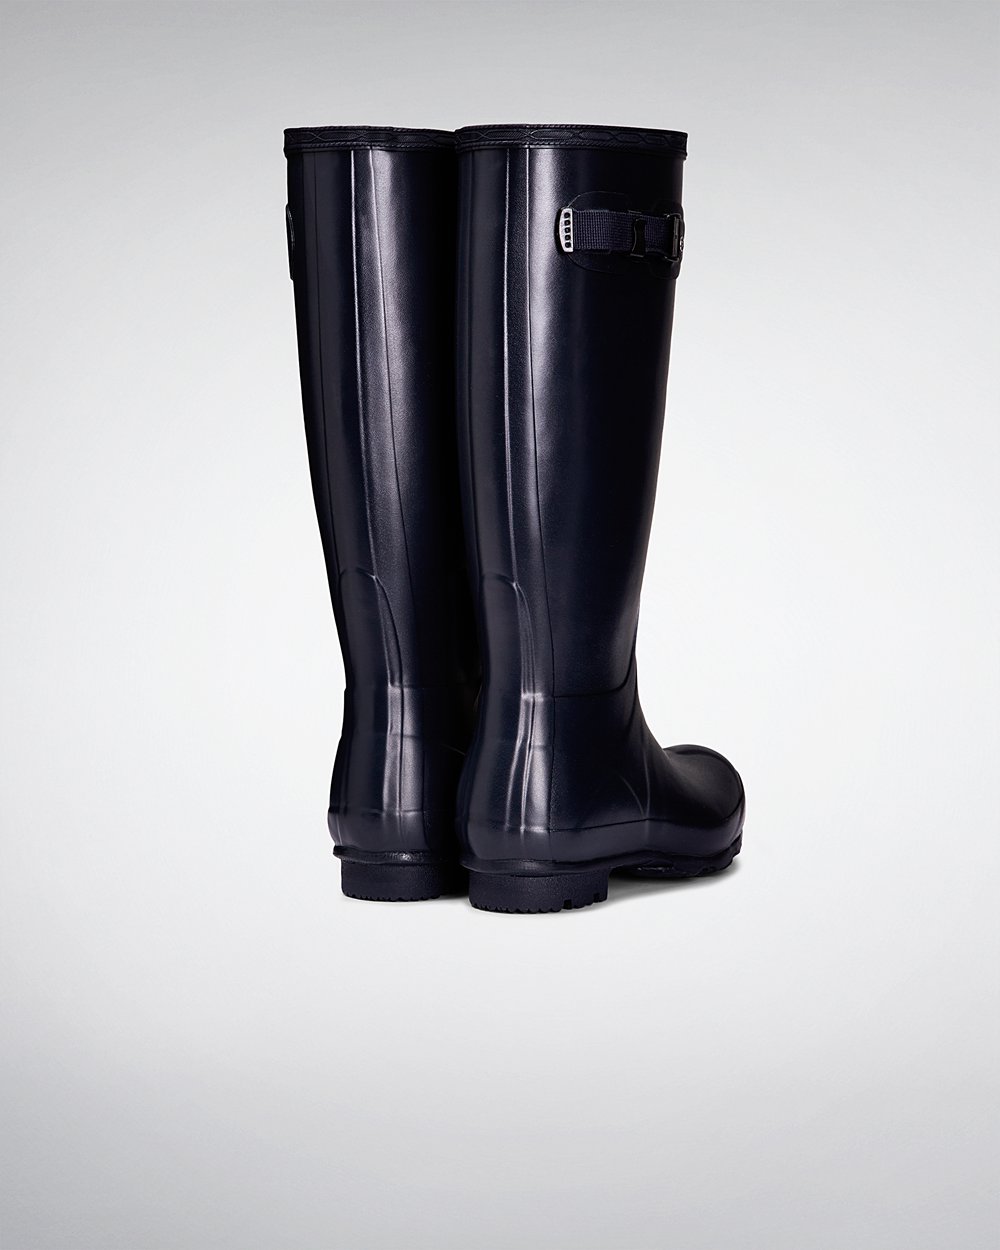 Womens Tall Rain Boots - Hunter Norris Field (59RMEDIHK) - Navy